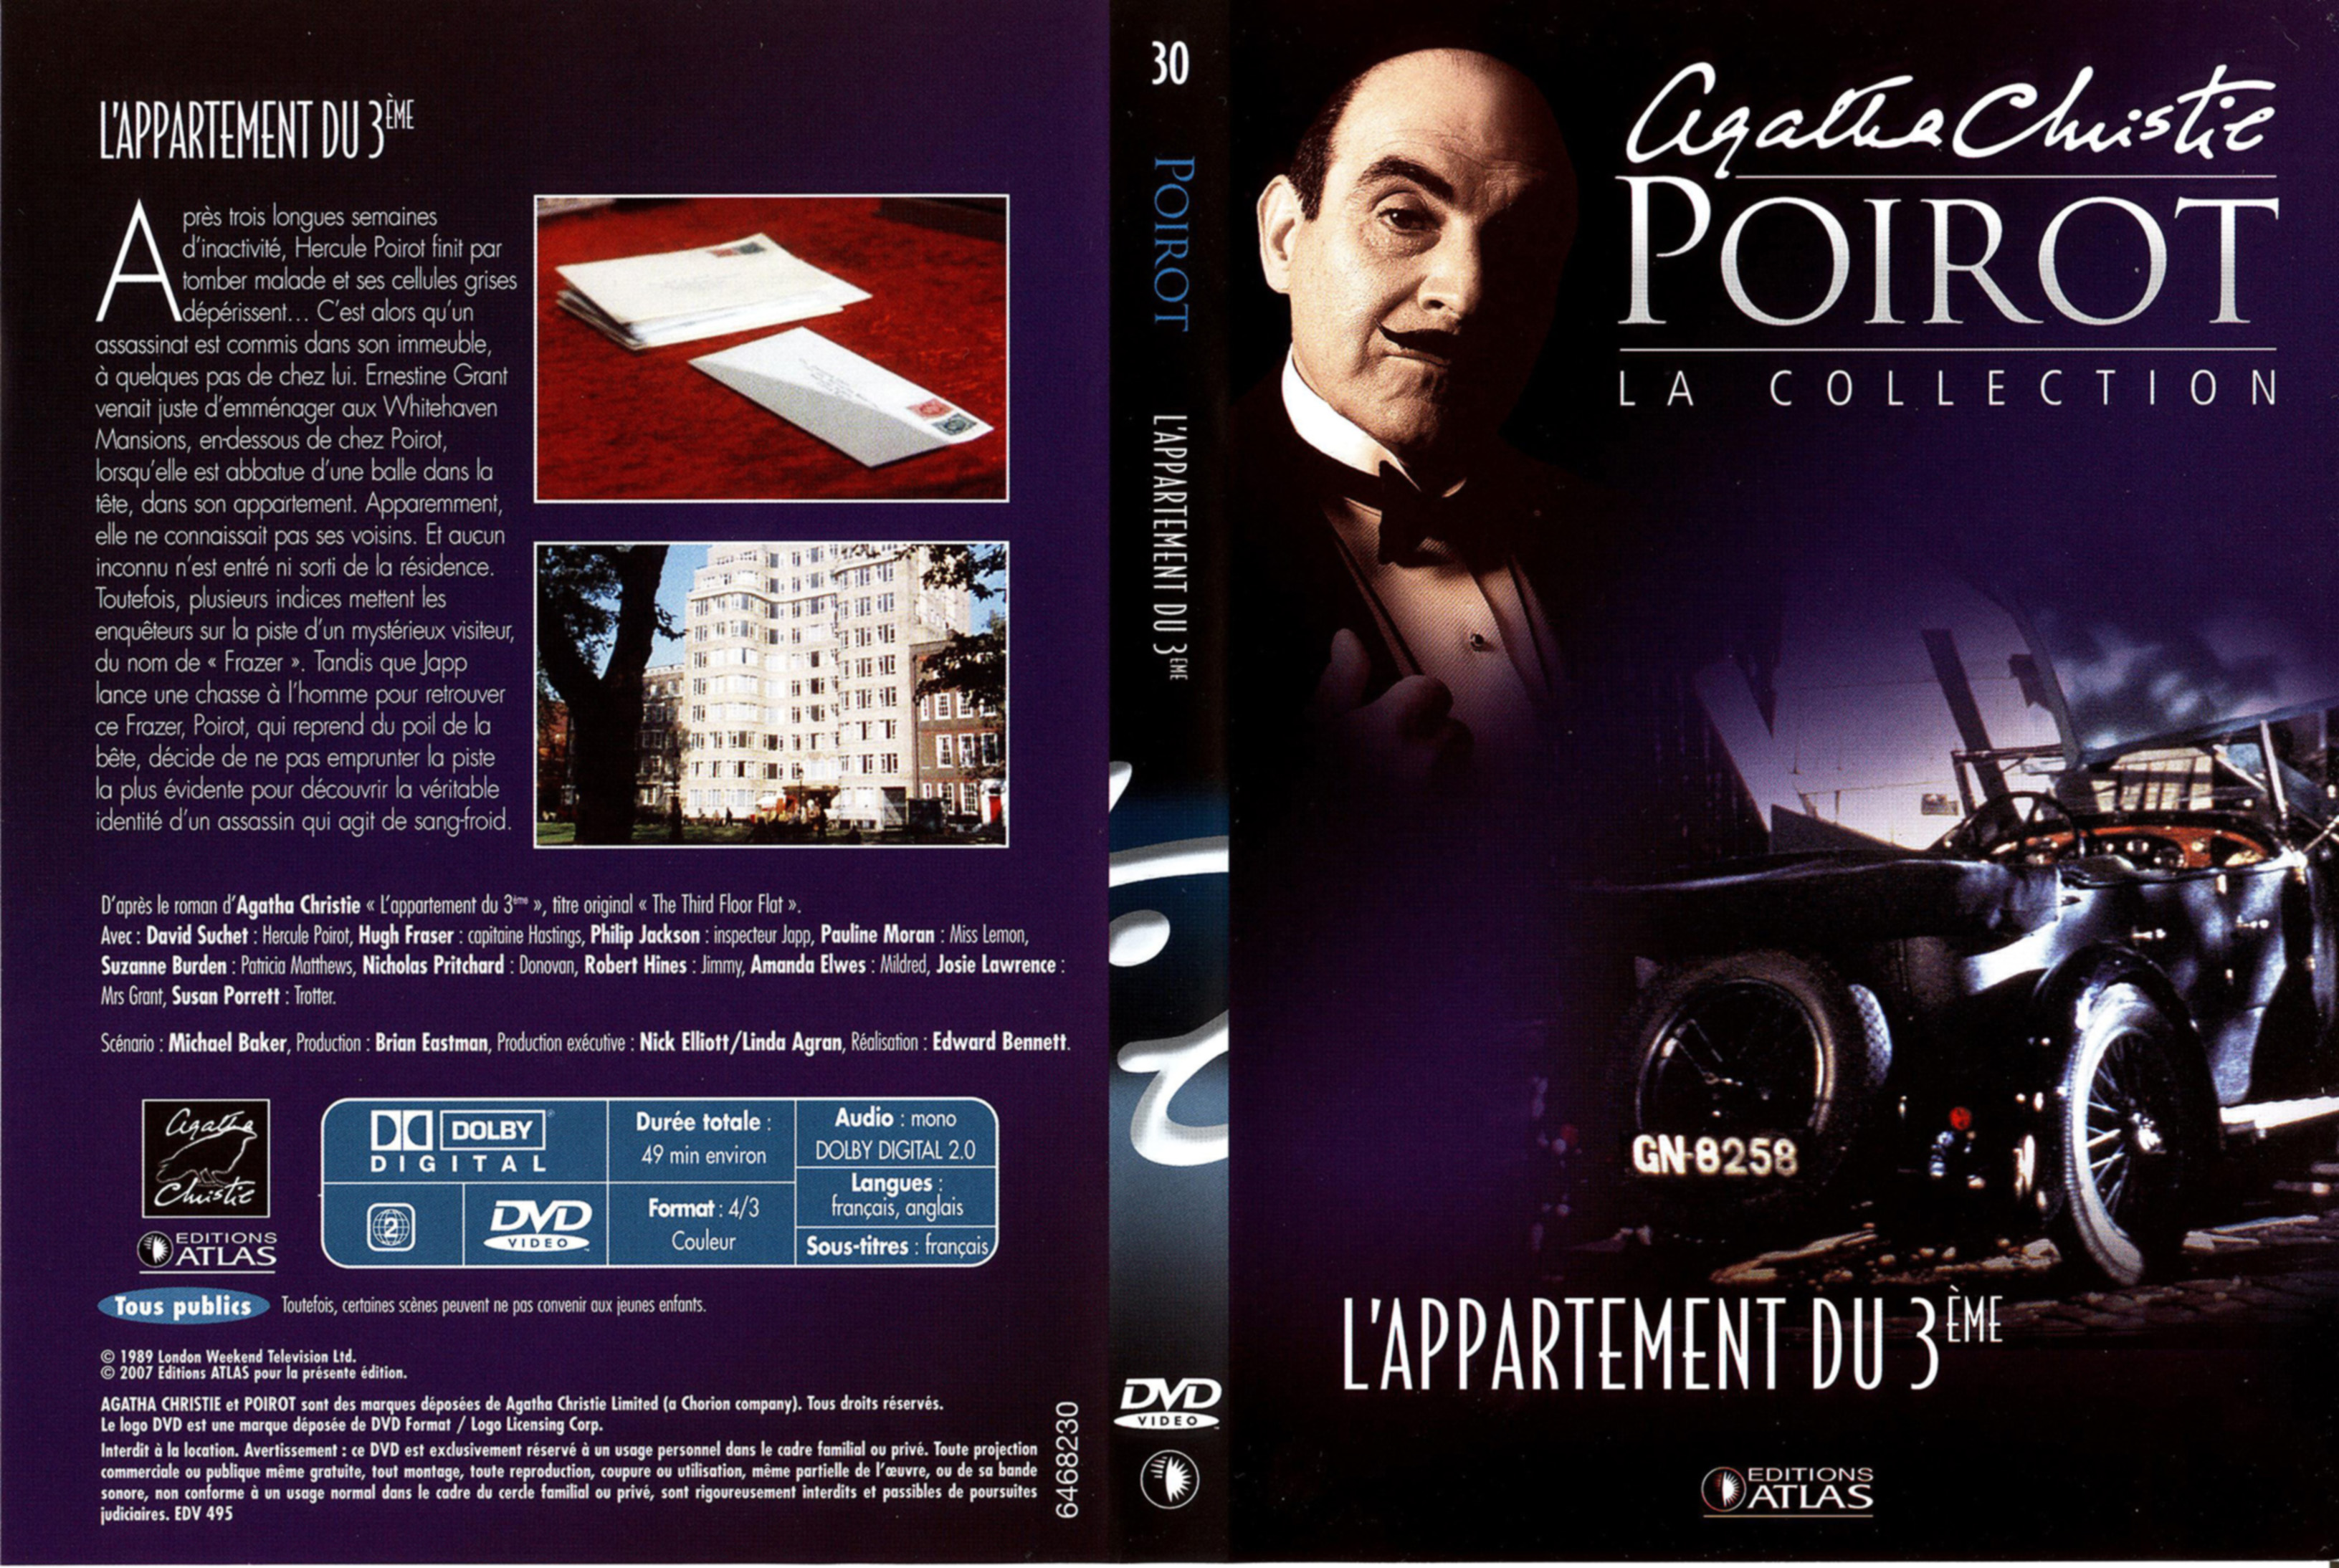 Jaquette DVD Hercule Poirot vol 30